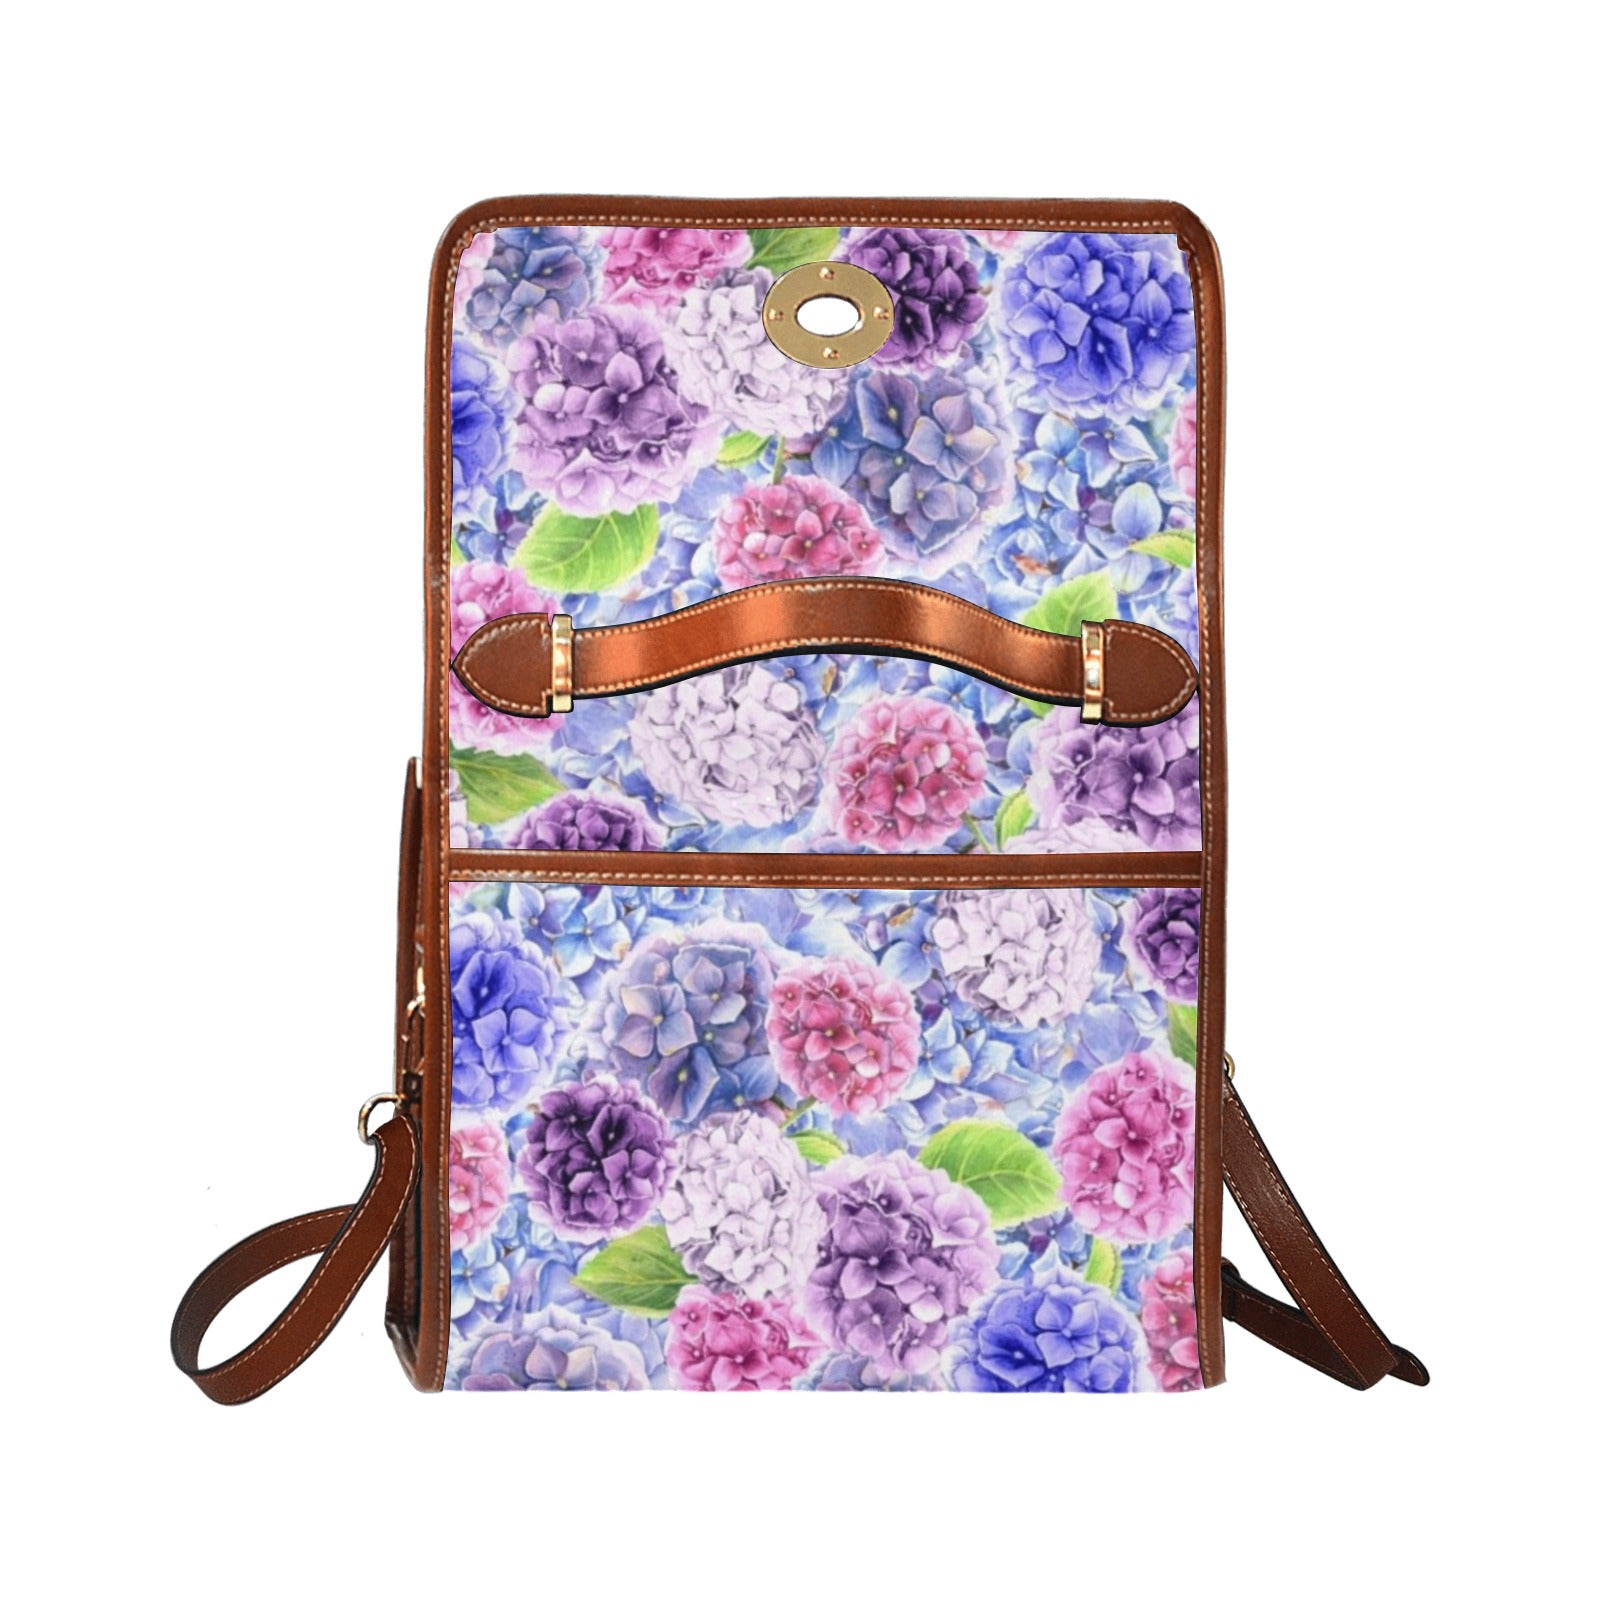 Hydrangeas - Waterproof Canvas Handbag